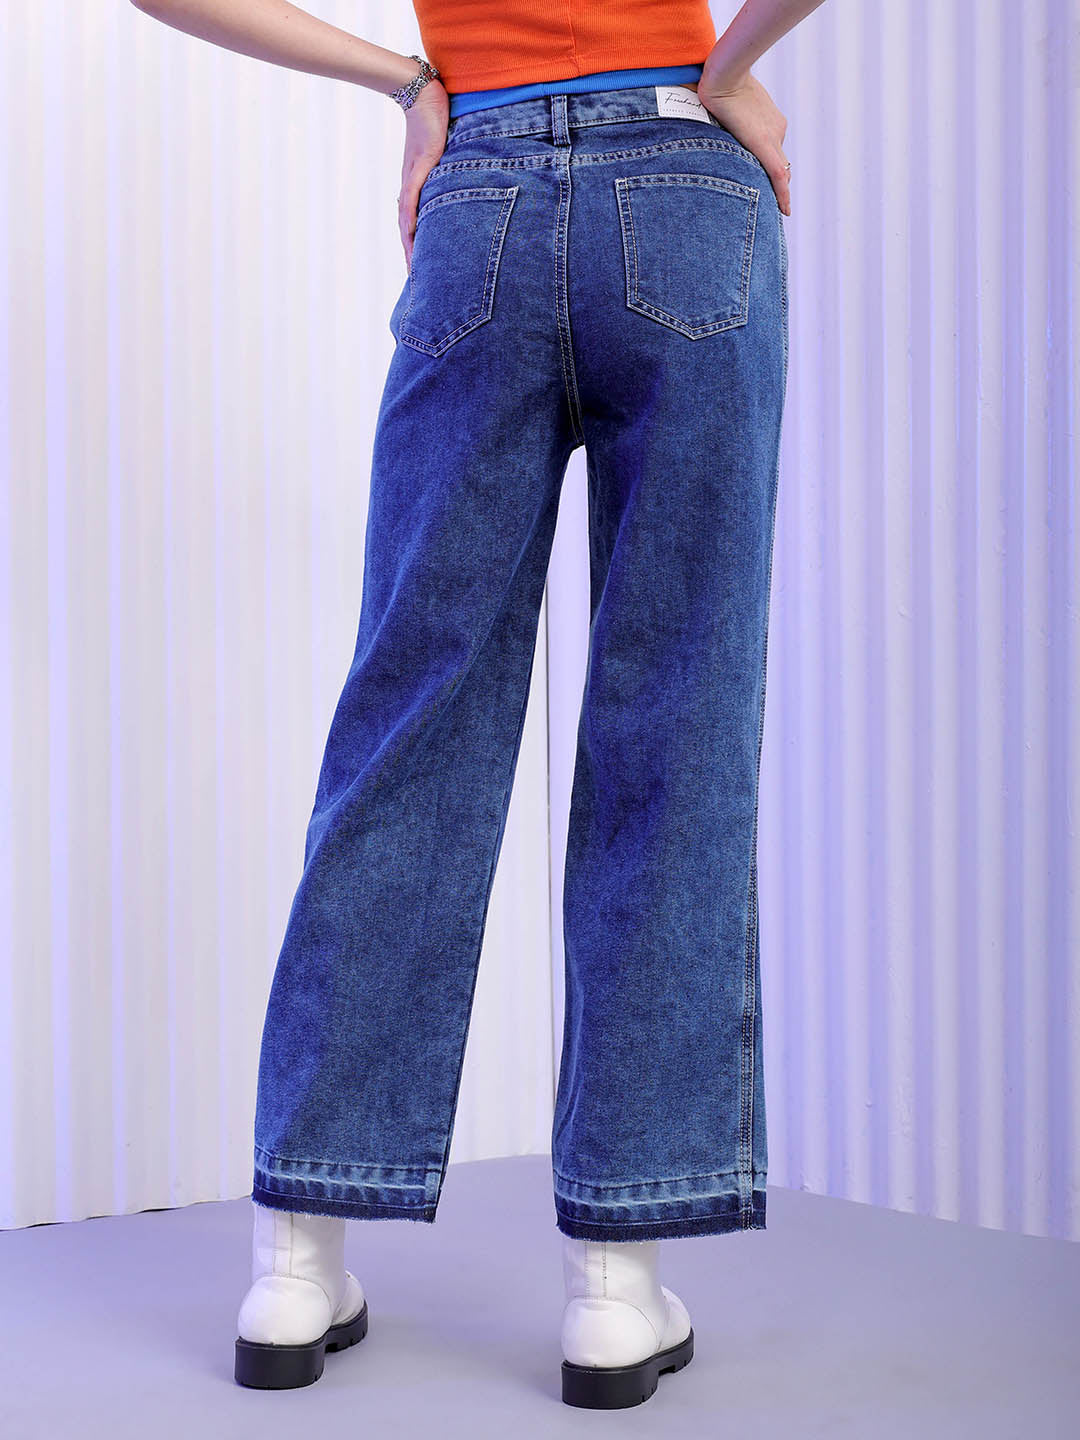 Shop Women Bootcut Jeans Online.